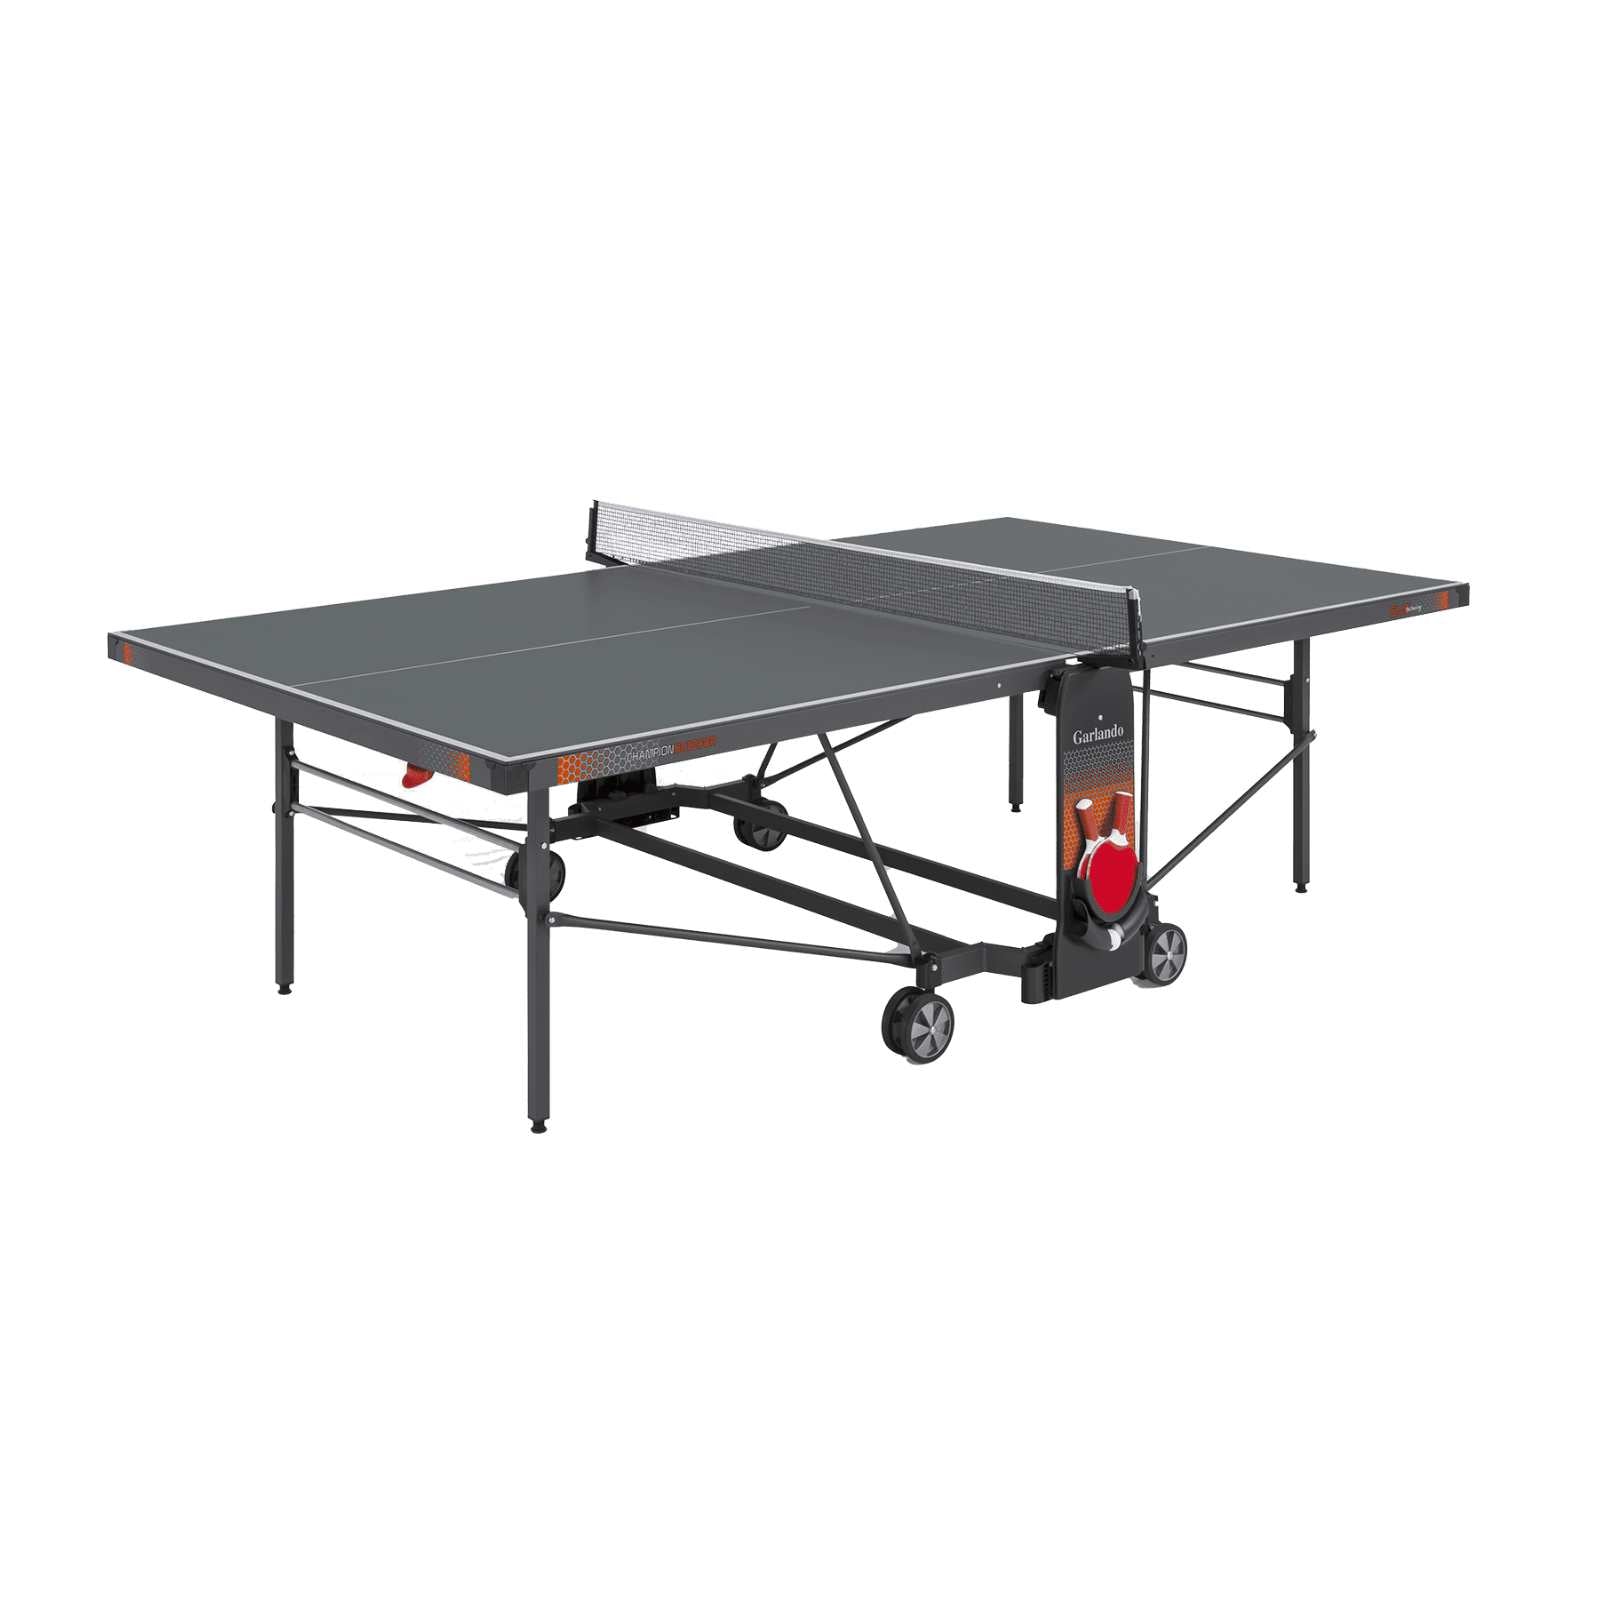 Champion Outdoor Blu - Tavolo Ping Pong Pieghevole con Sistema Ergonomico ECS - Finitura Antiriflesso